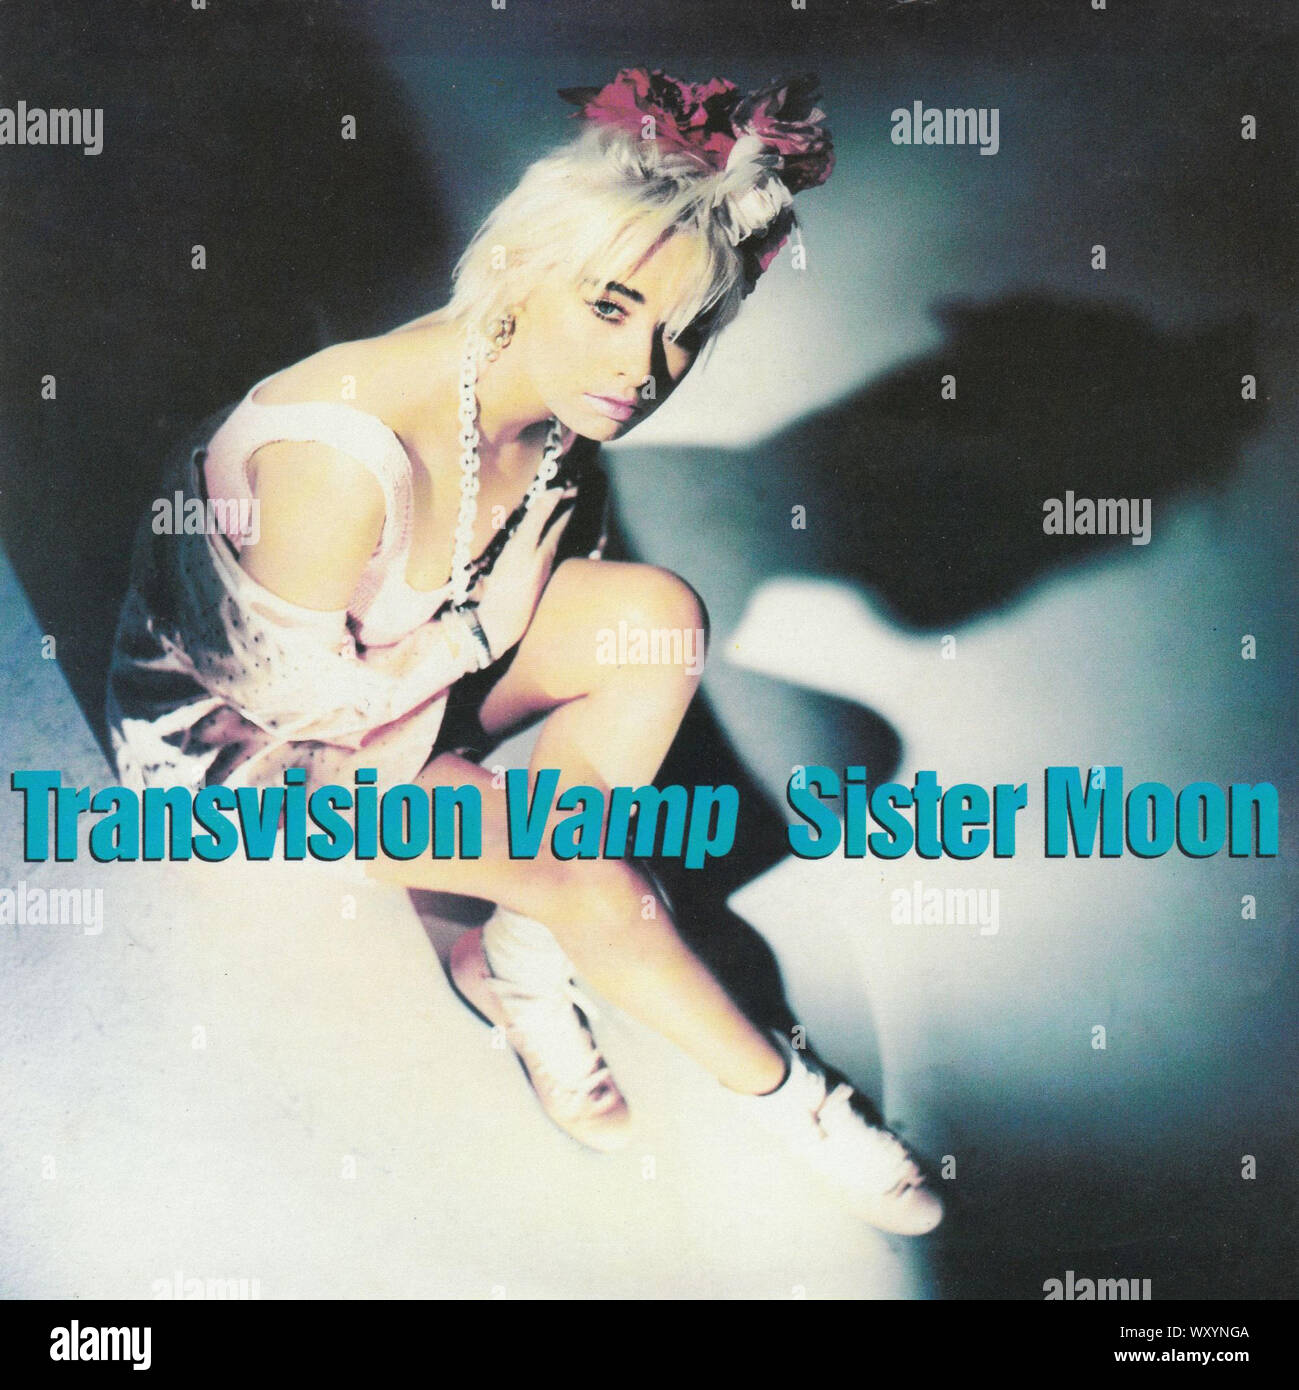 Transvision Vamp группа. The Moon sister. Transvision Vamp Baby i don't Care. Sister moon